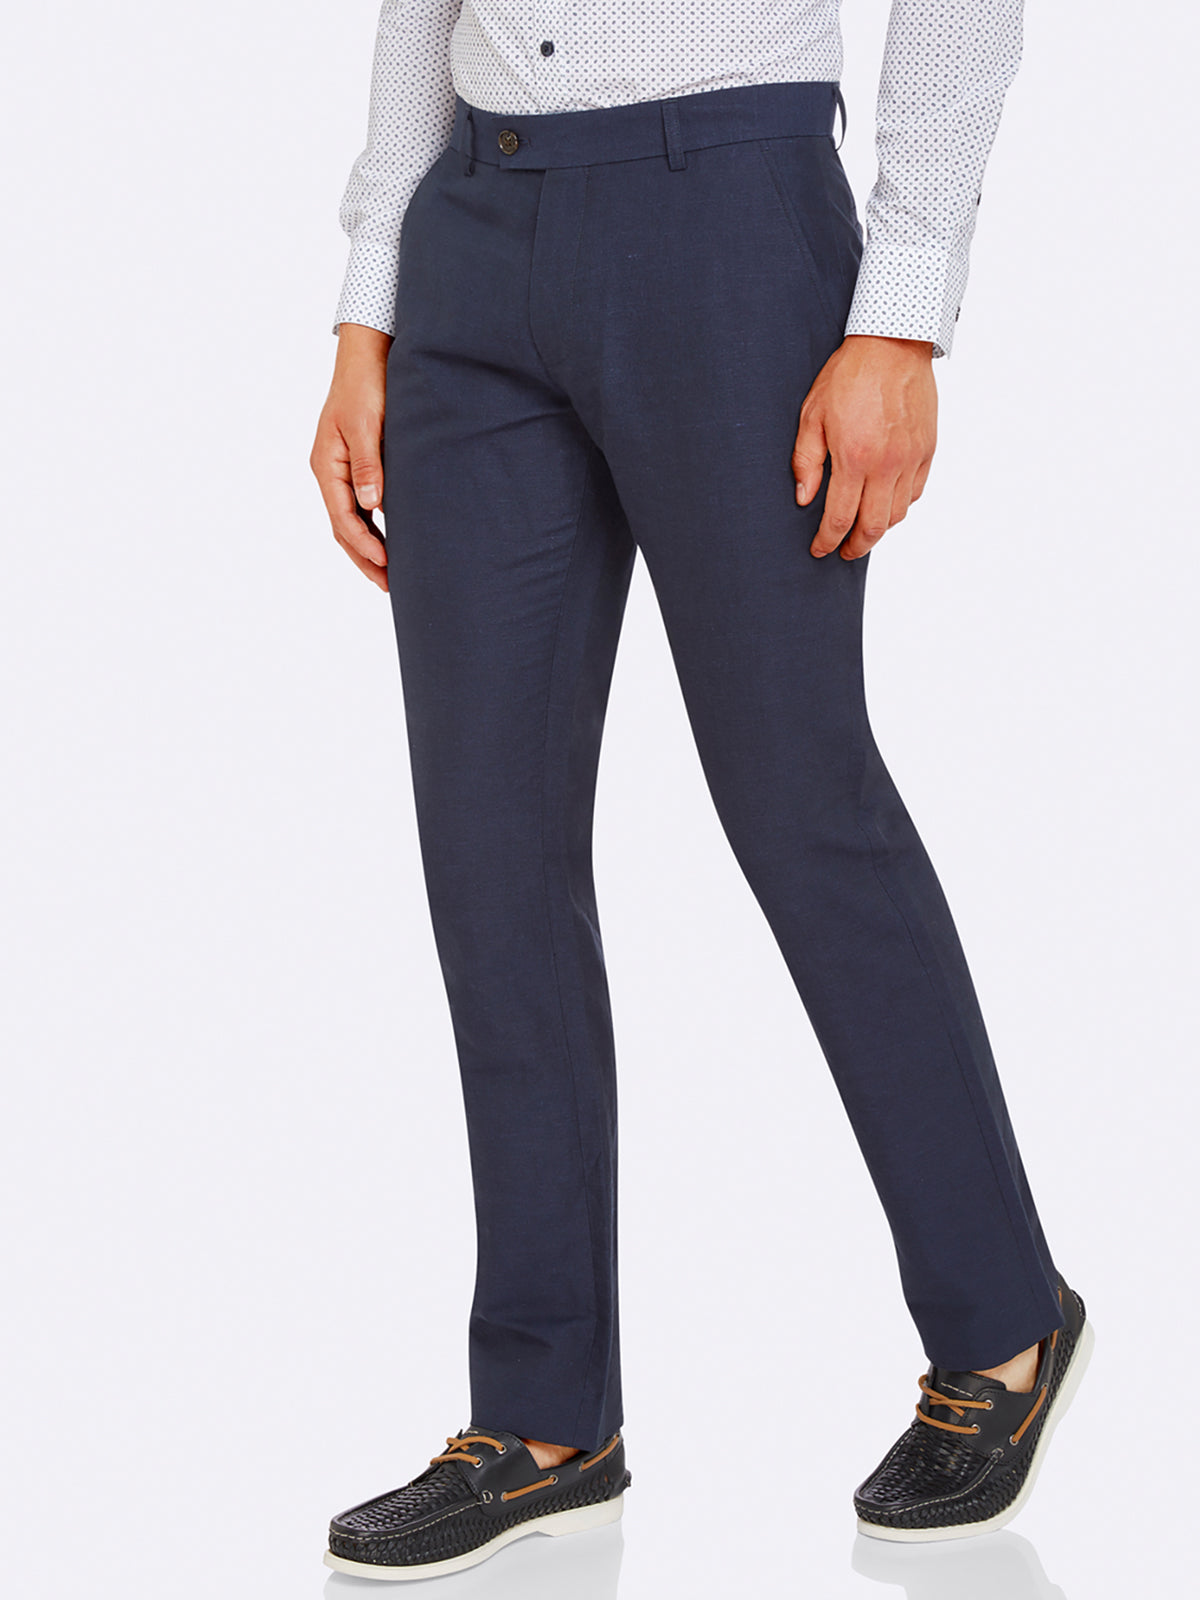 ASOS DESIGN slim linen trousers in khaki | ASOS